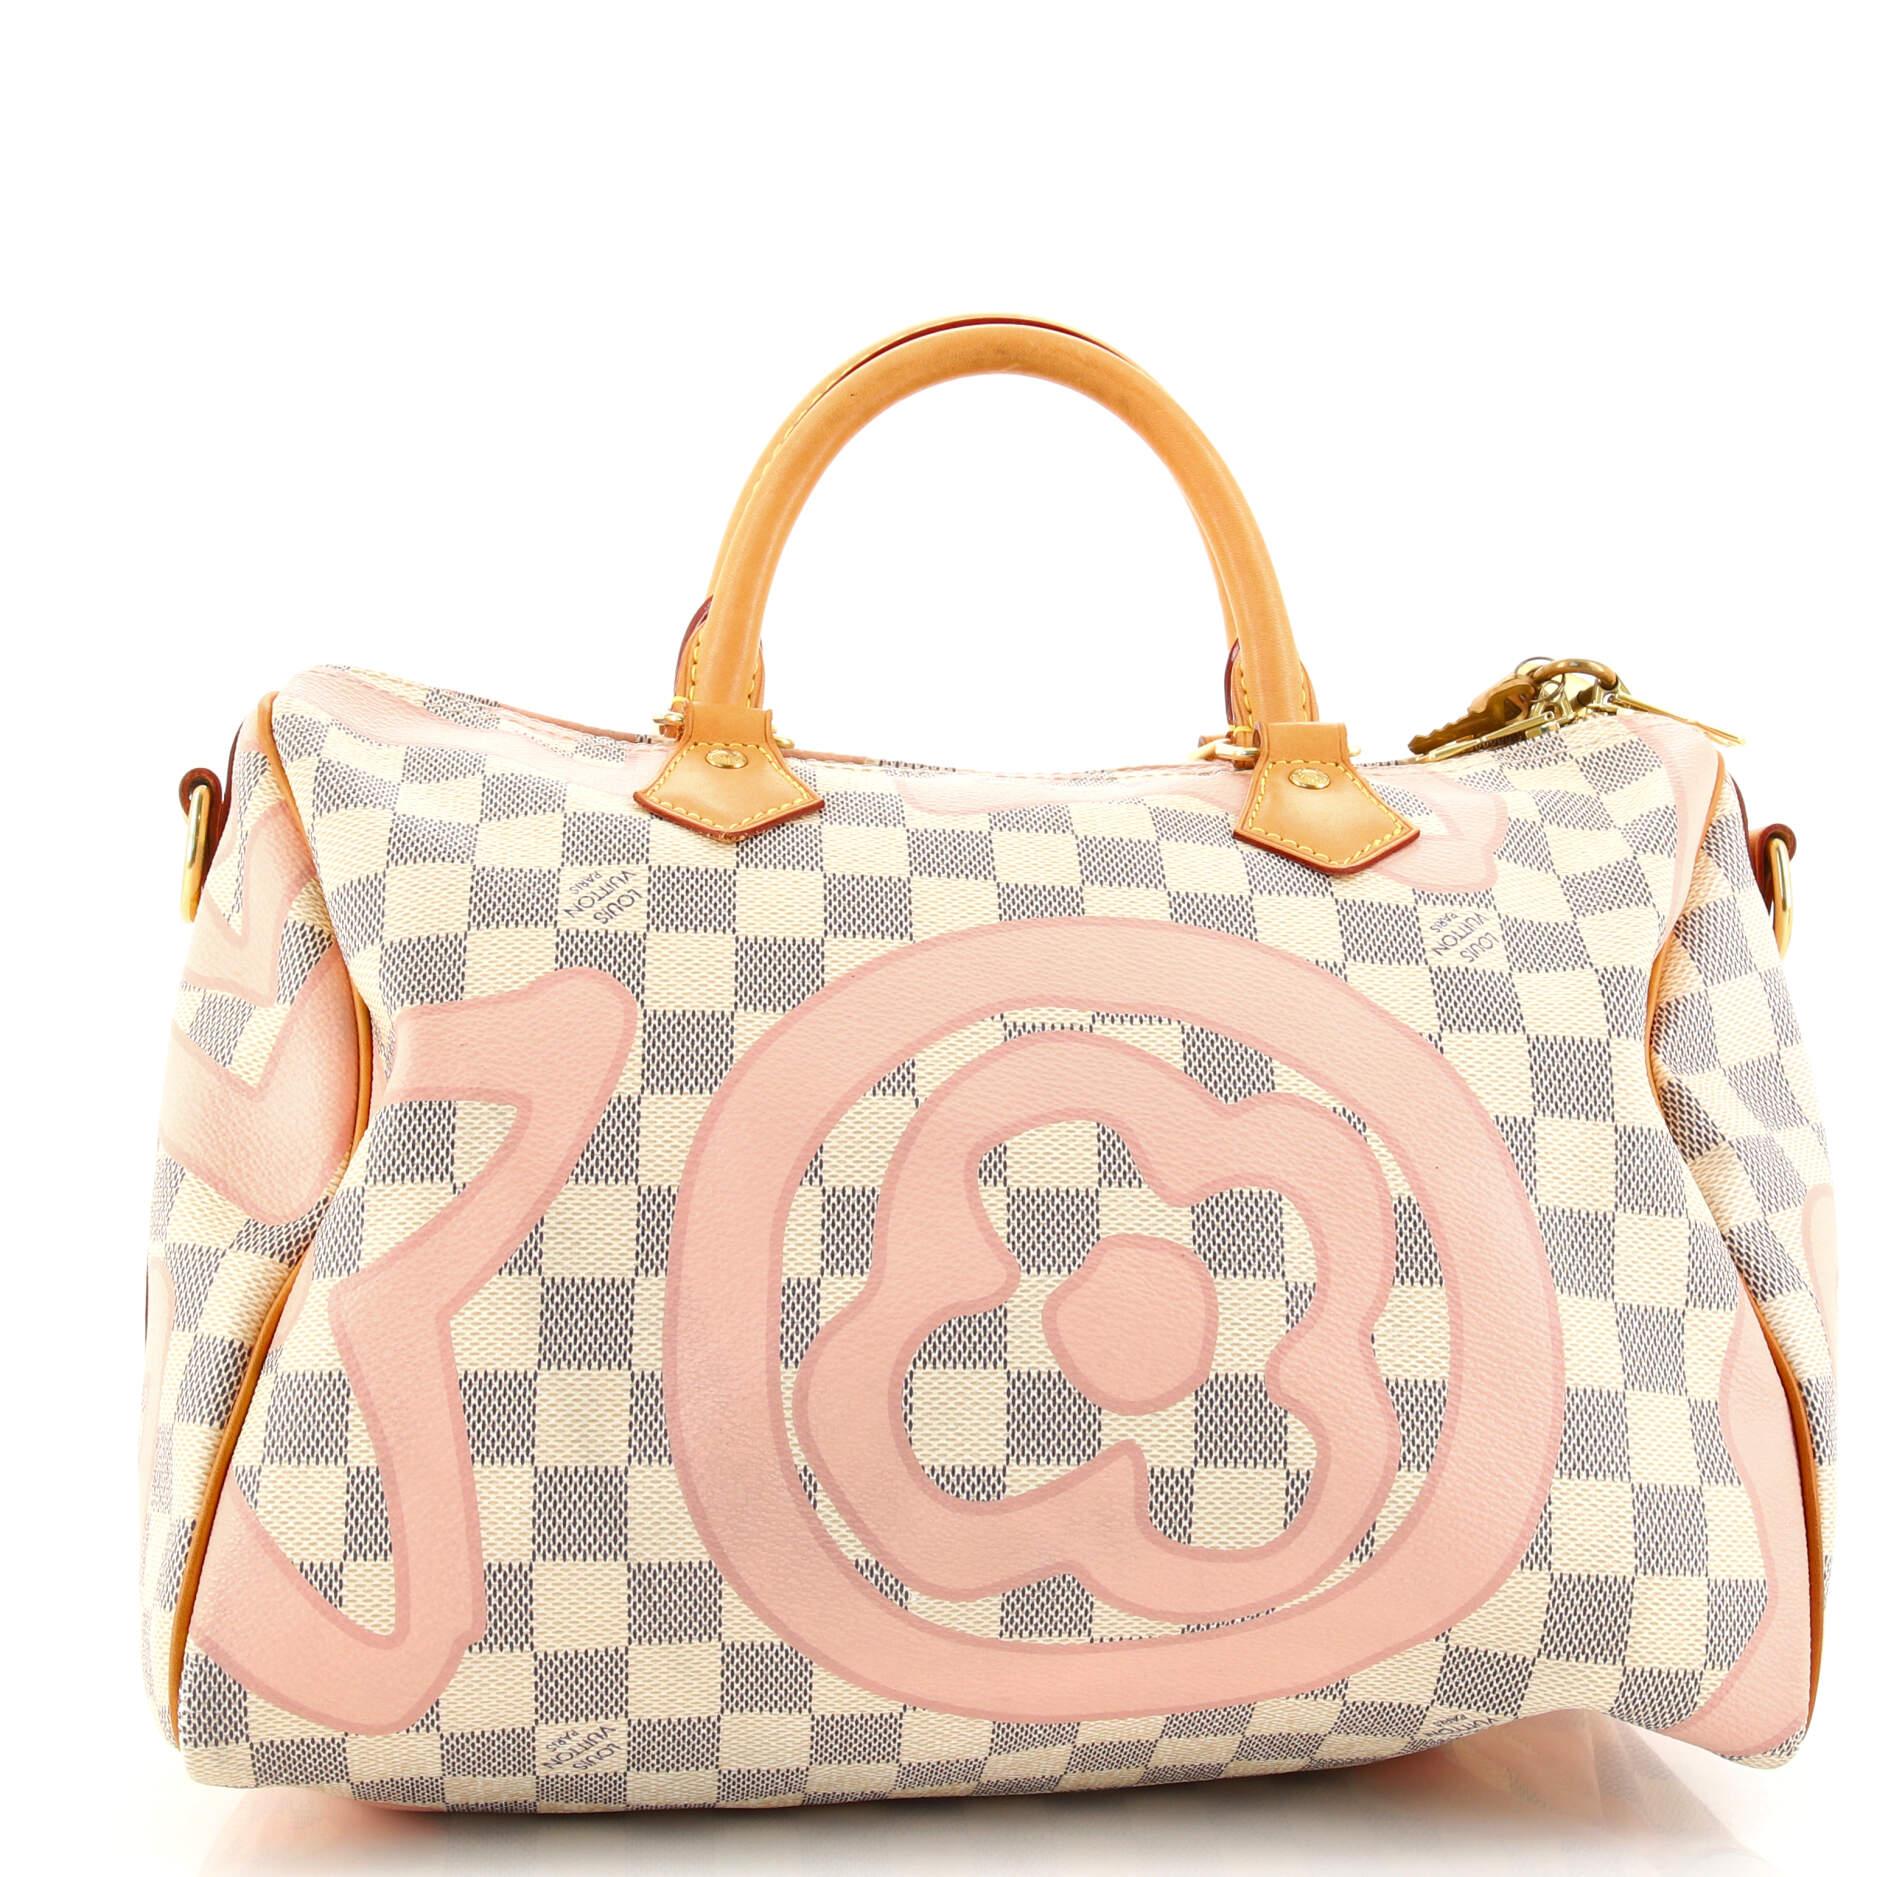 Beige Louis Vuitton Speedy Bandouliere Bag Limited Edition Damier Tahitienne 30